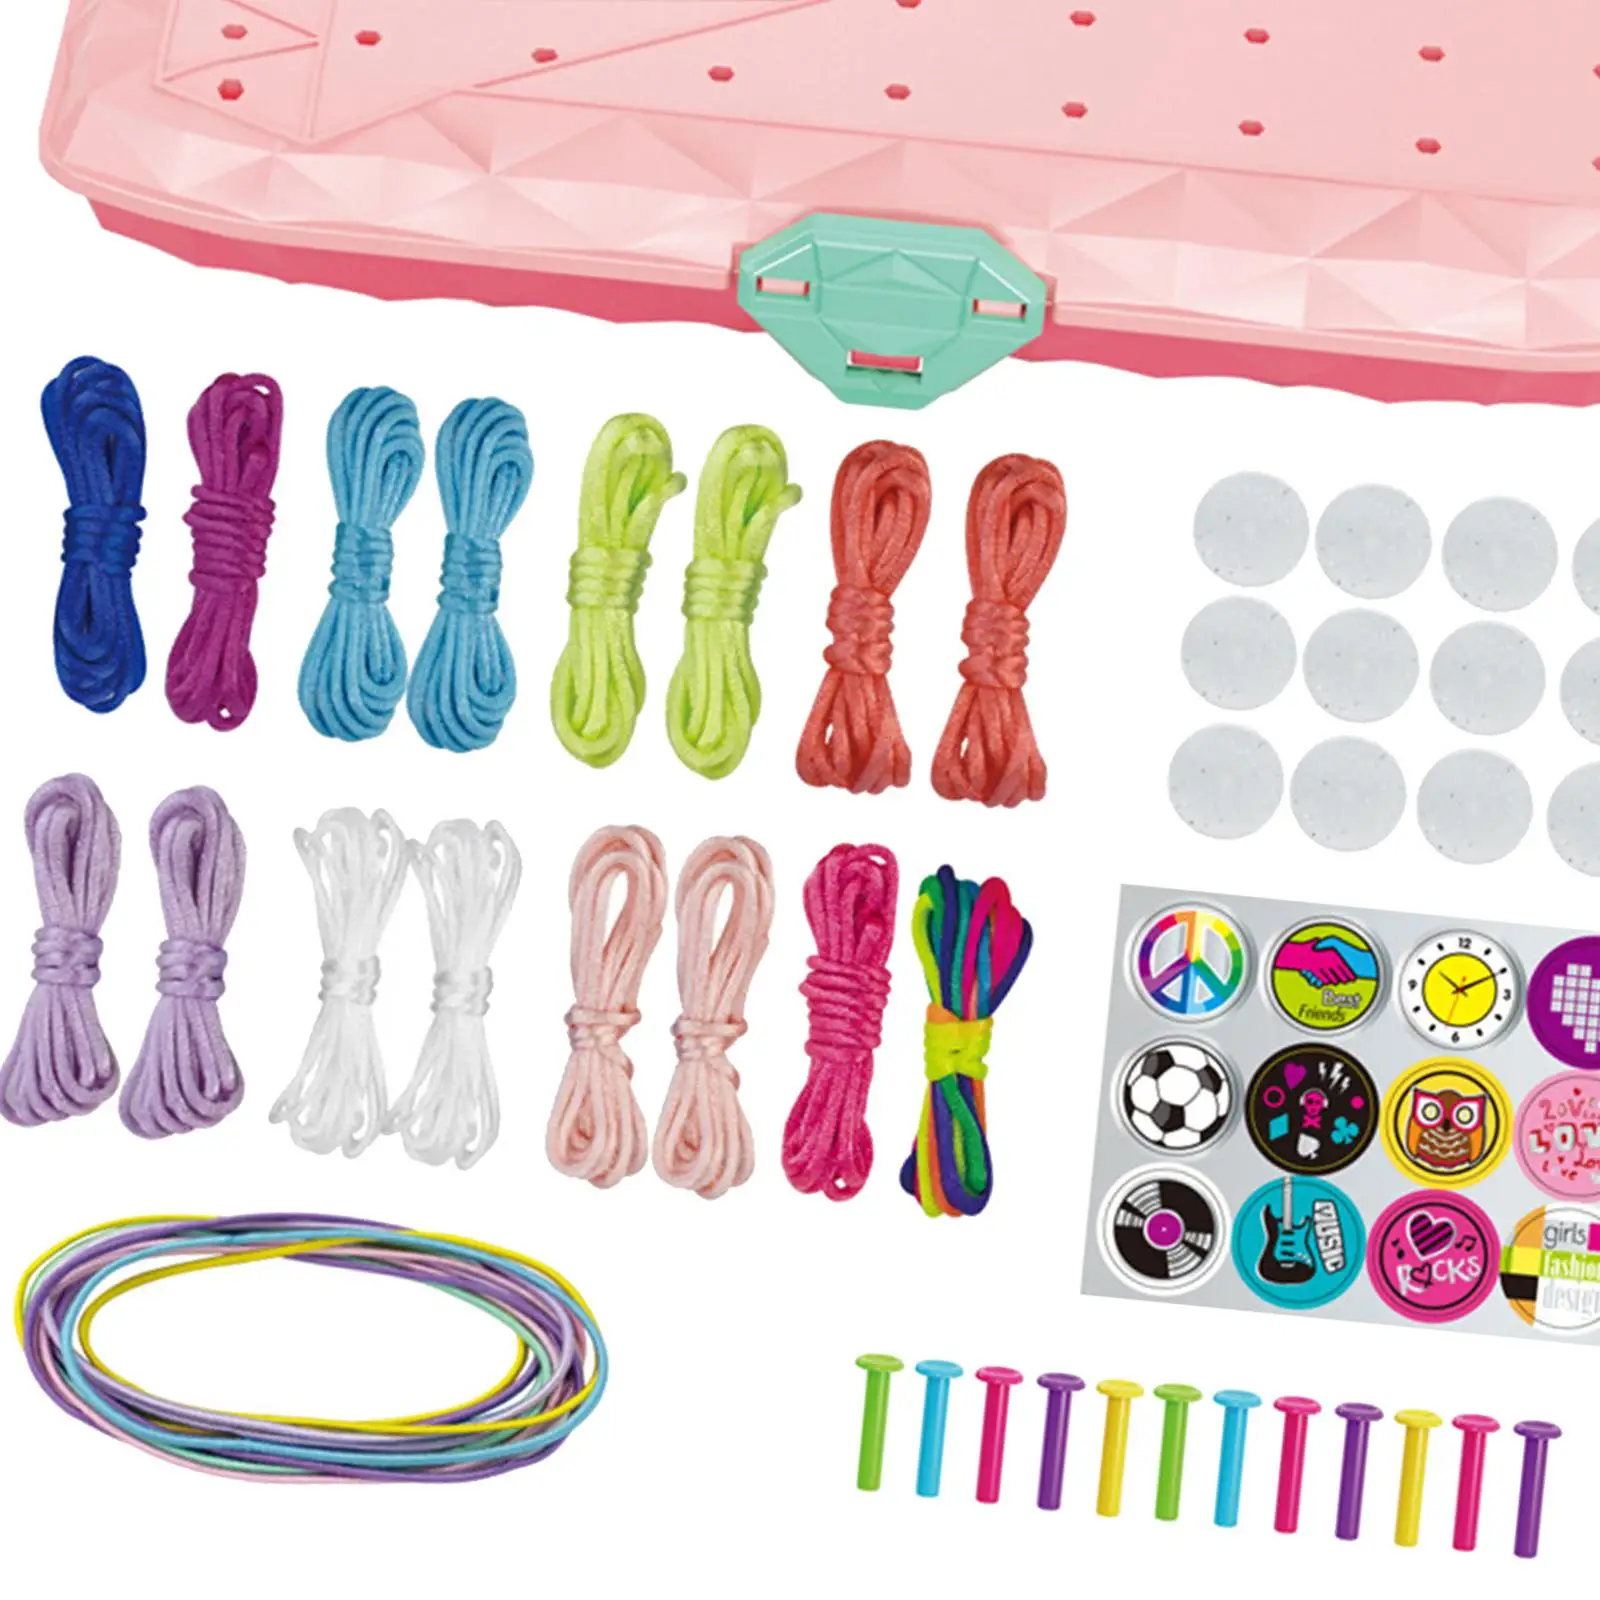 

Bracelet Making Set Colorful Sticker Arts with Braiding Loom Maker DIY Bracelet Kit Jewelry Kit for Beginners Adults Party Favor